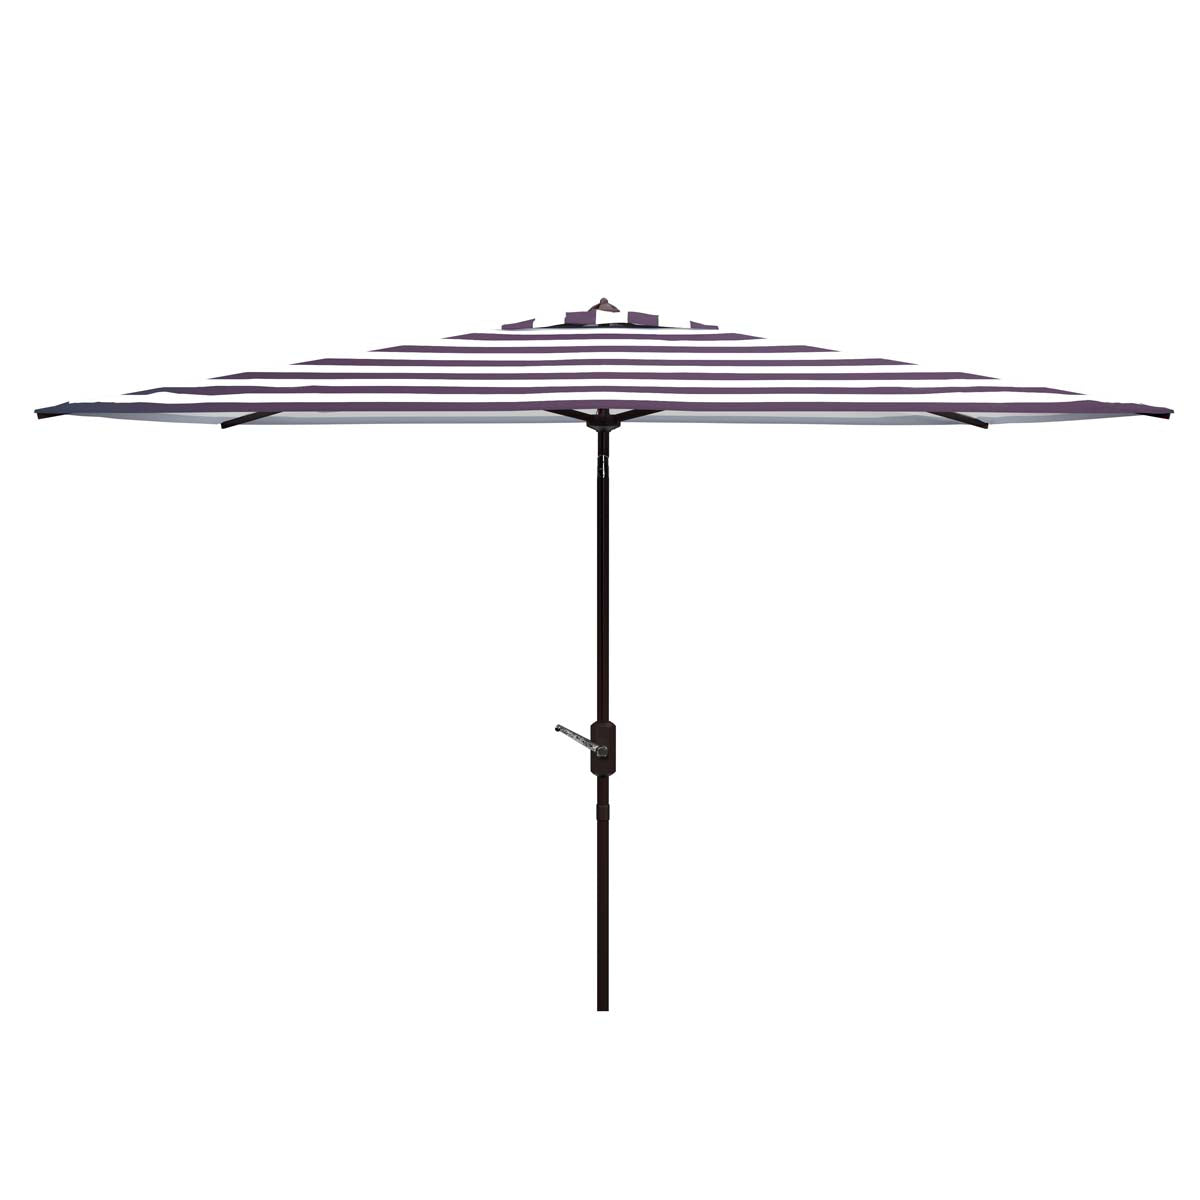 Safavieh Iris Fashion Line 6.5 X 10 Ft Rect Umbrella , PAT8304 - Black/White